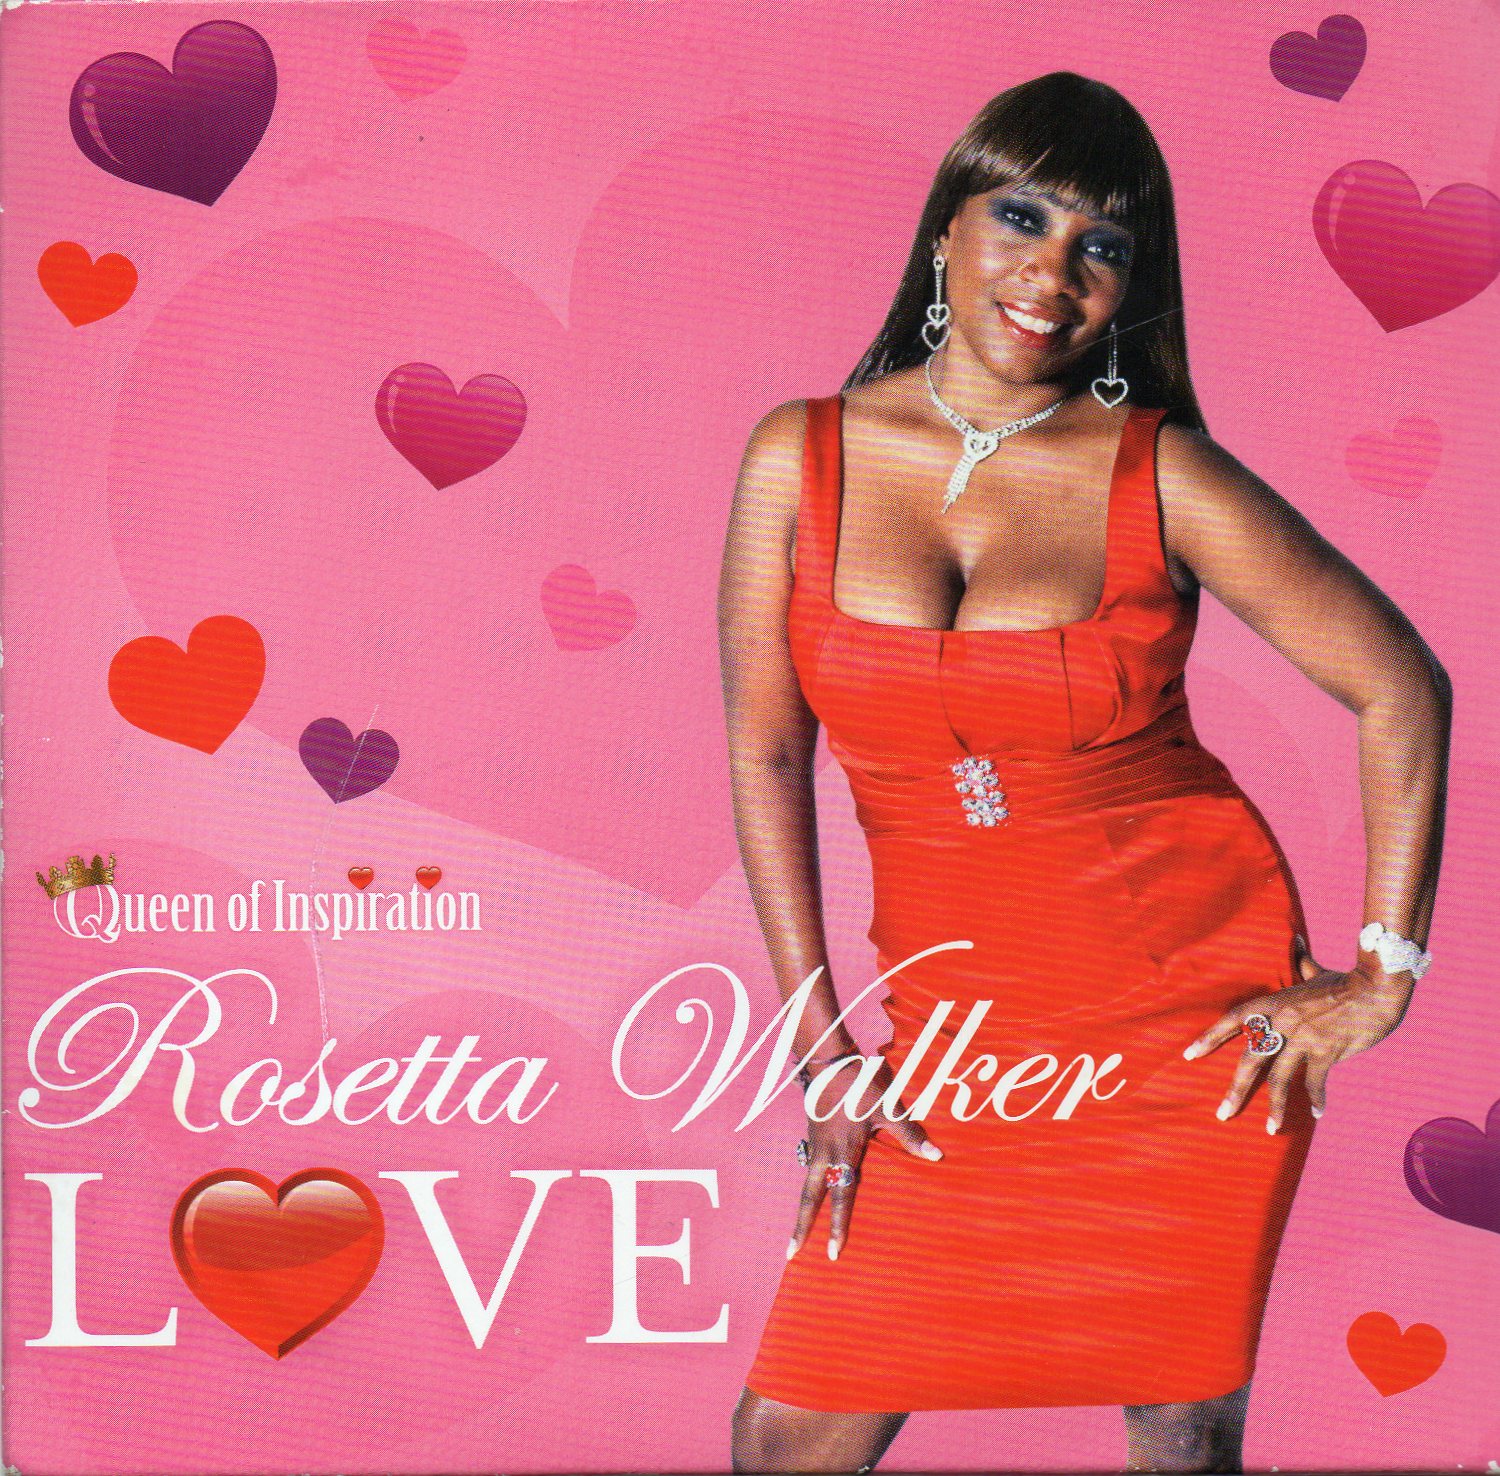 Rosetta Walker